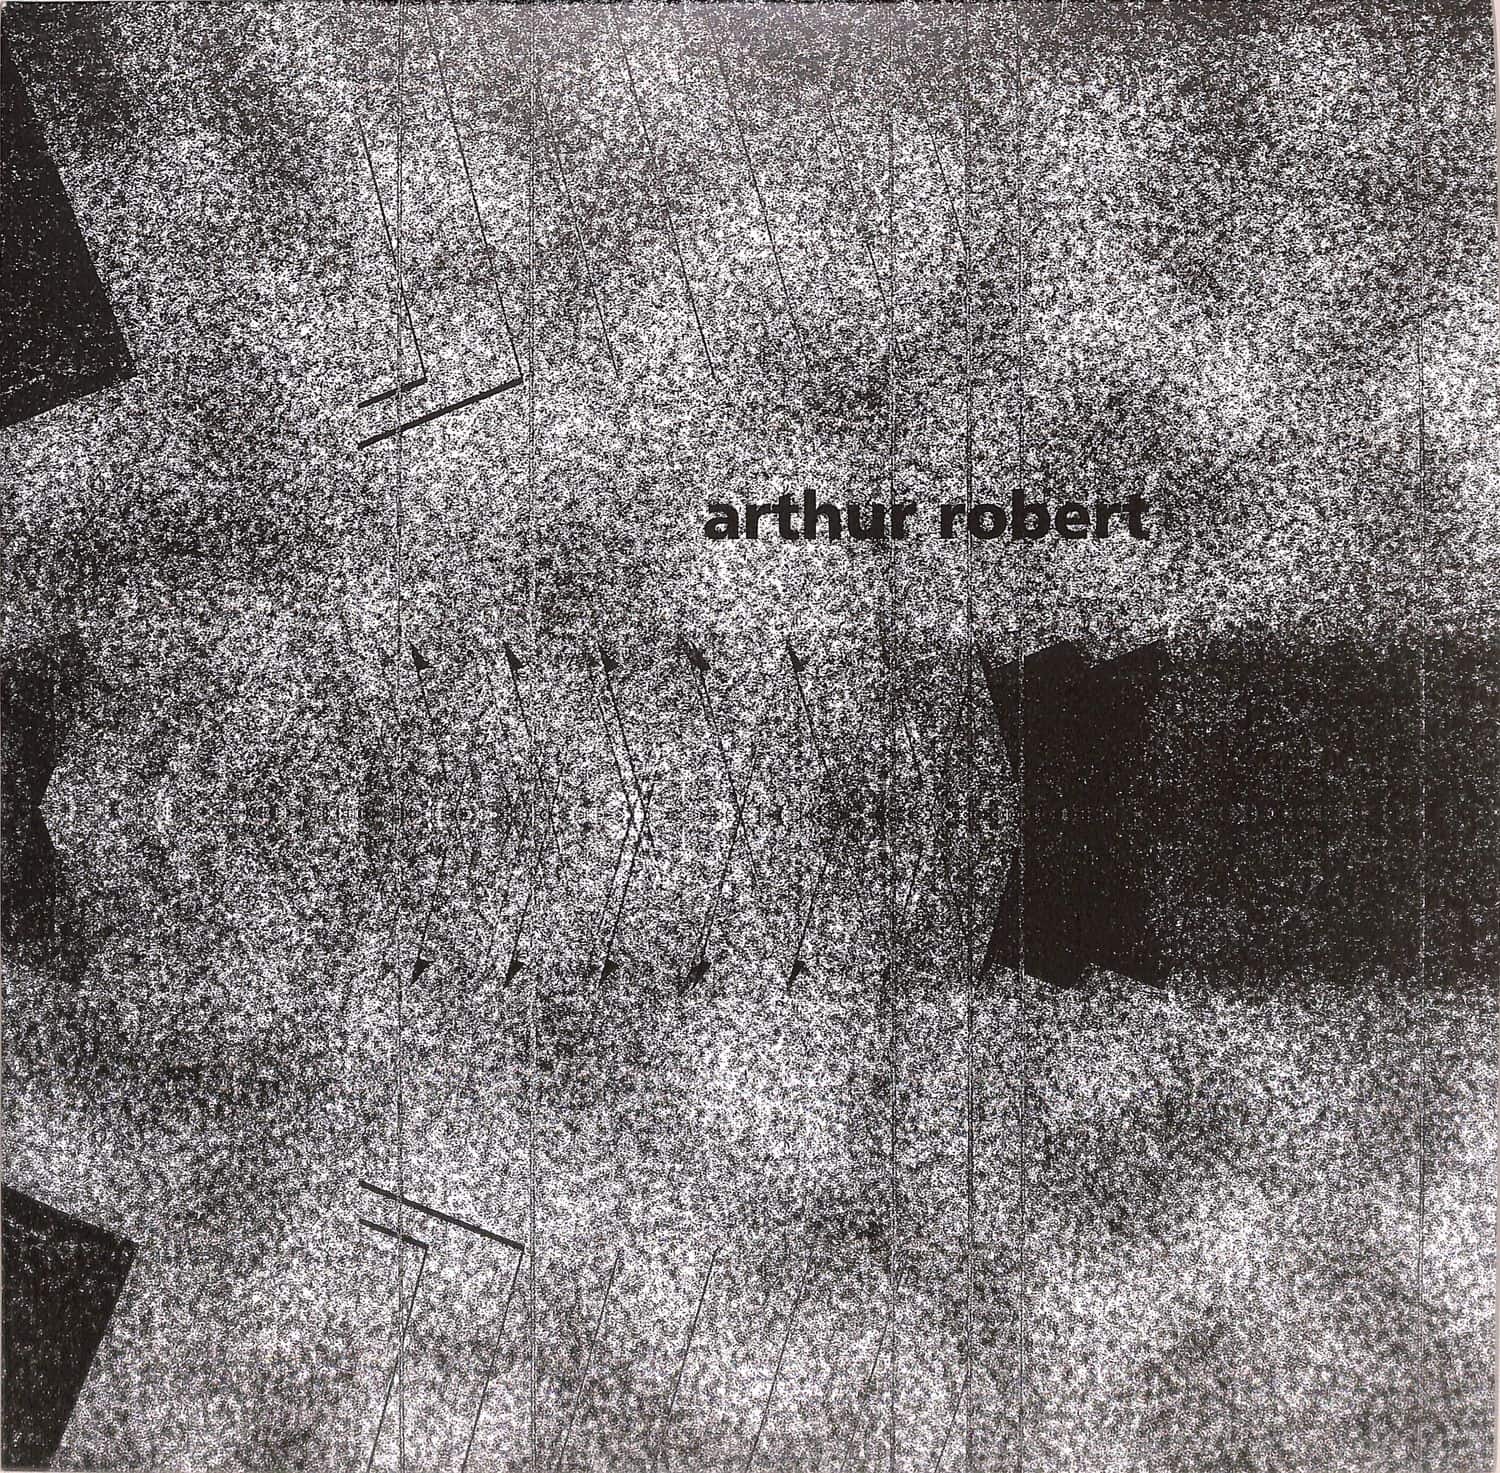 Arthur Robert - TRANSITION PART 1